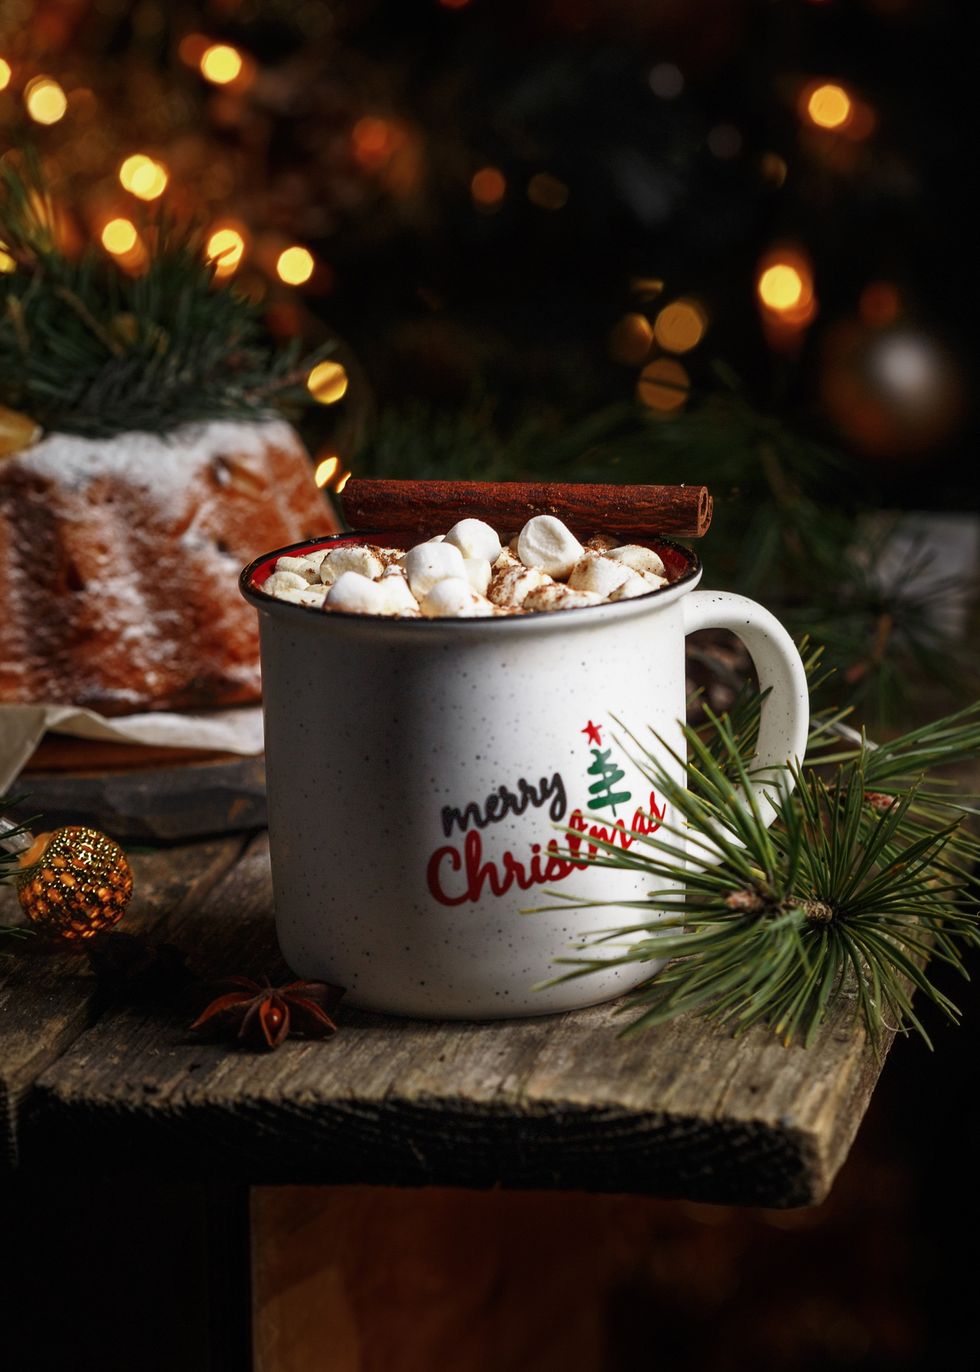 Merry Christmas mug with hot chocolate and mini marshmallows